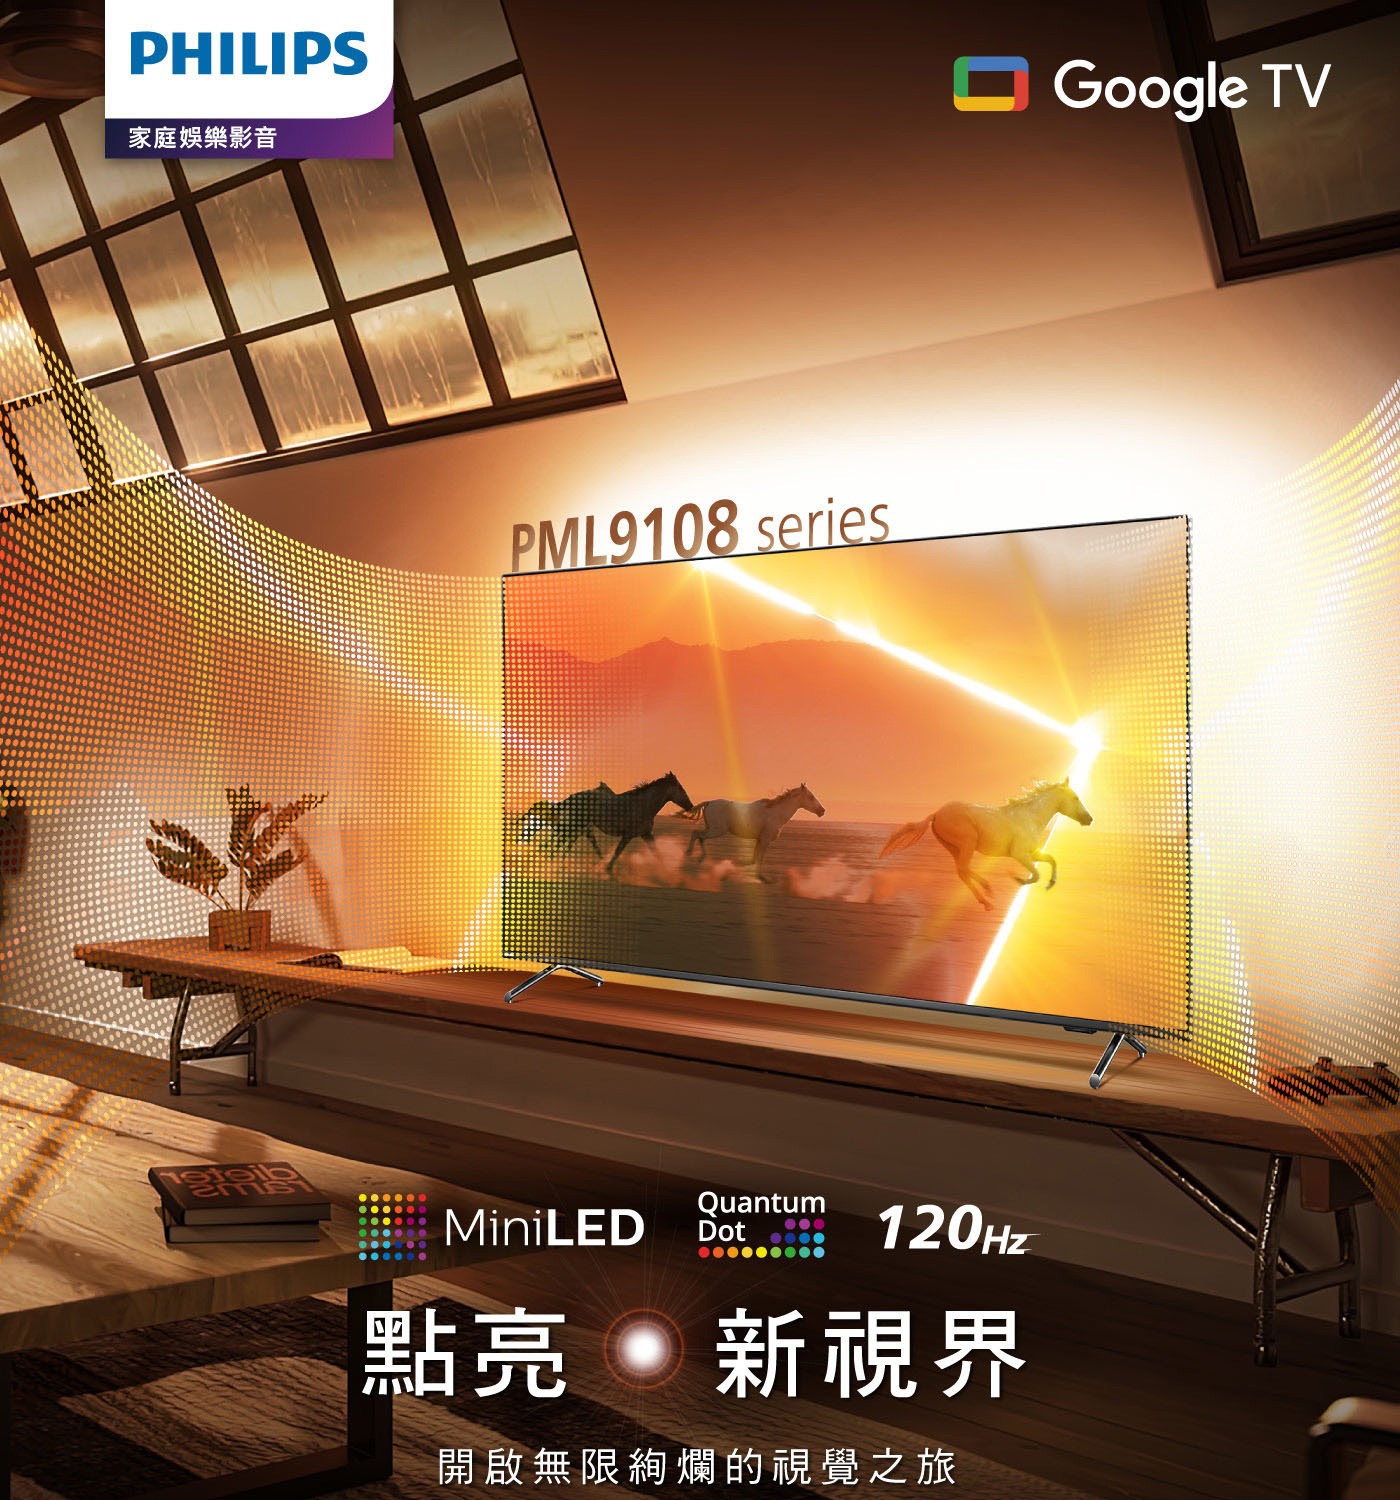 Philips MiniLED Google TV 顯示器，MINI LED +Quantum Dot 色彩技術 ，廣色域 98% DCI 120Hz面板，Google TV 個人化的連網娛樂系統+聲控語音，三邊流光溢彩身臨其境娛樂。